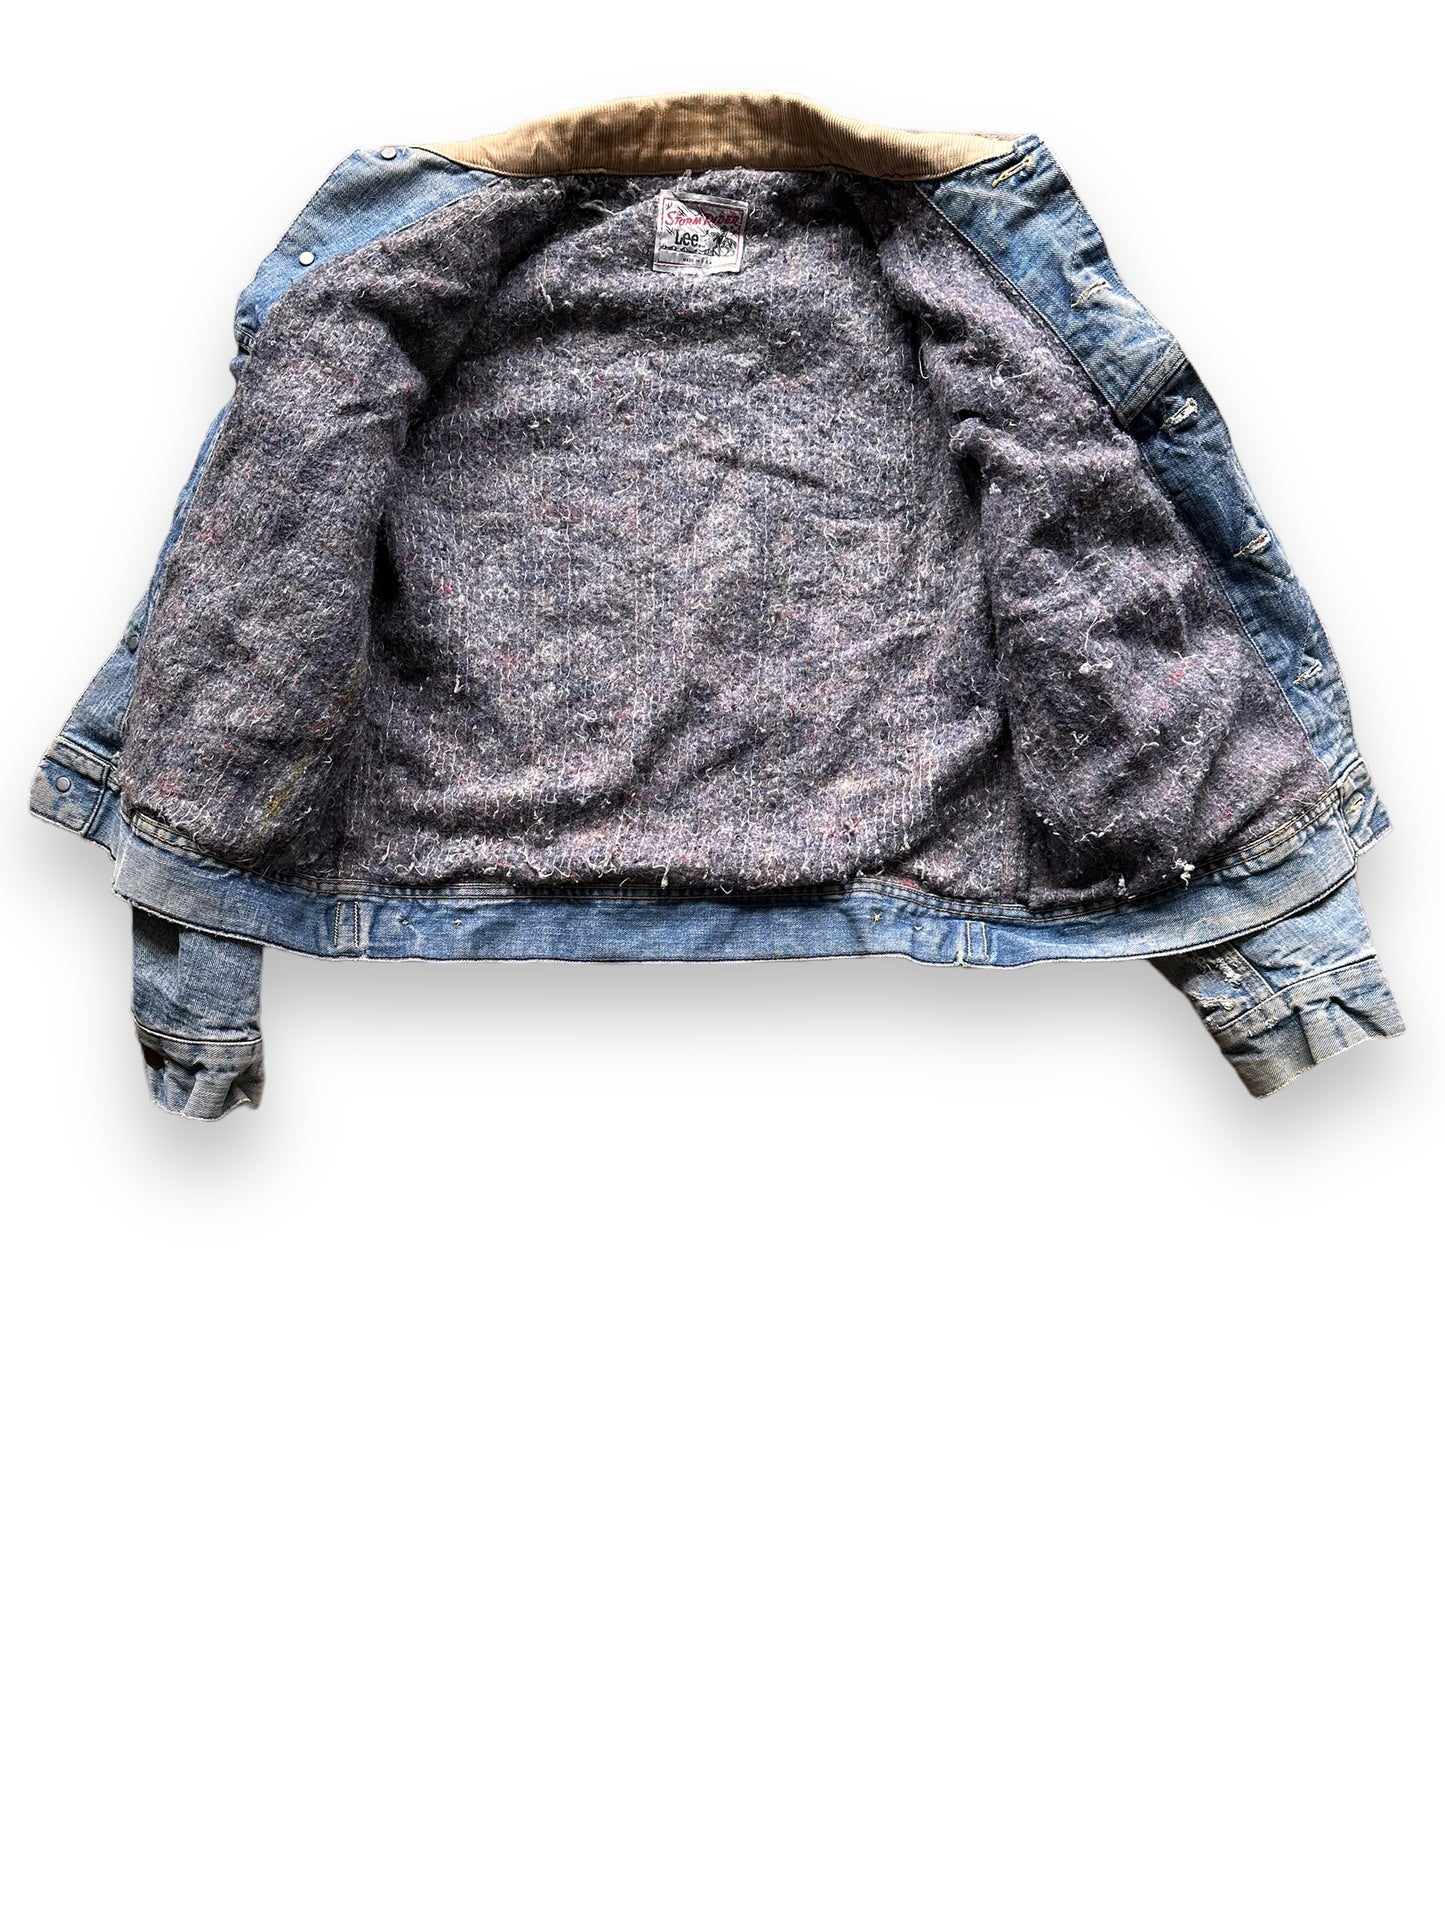 Liner View of Vintage Blanket Lined Lee Storm Rider Denim Jacket SZ L| Barn Owl Vintage | Seattle True Vintage Workwear